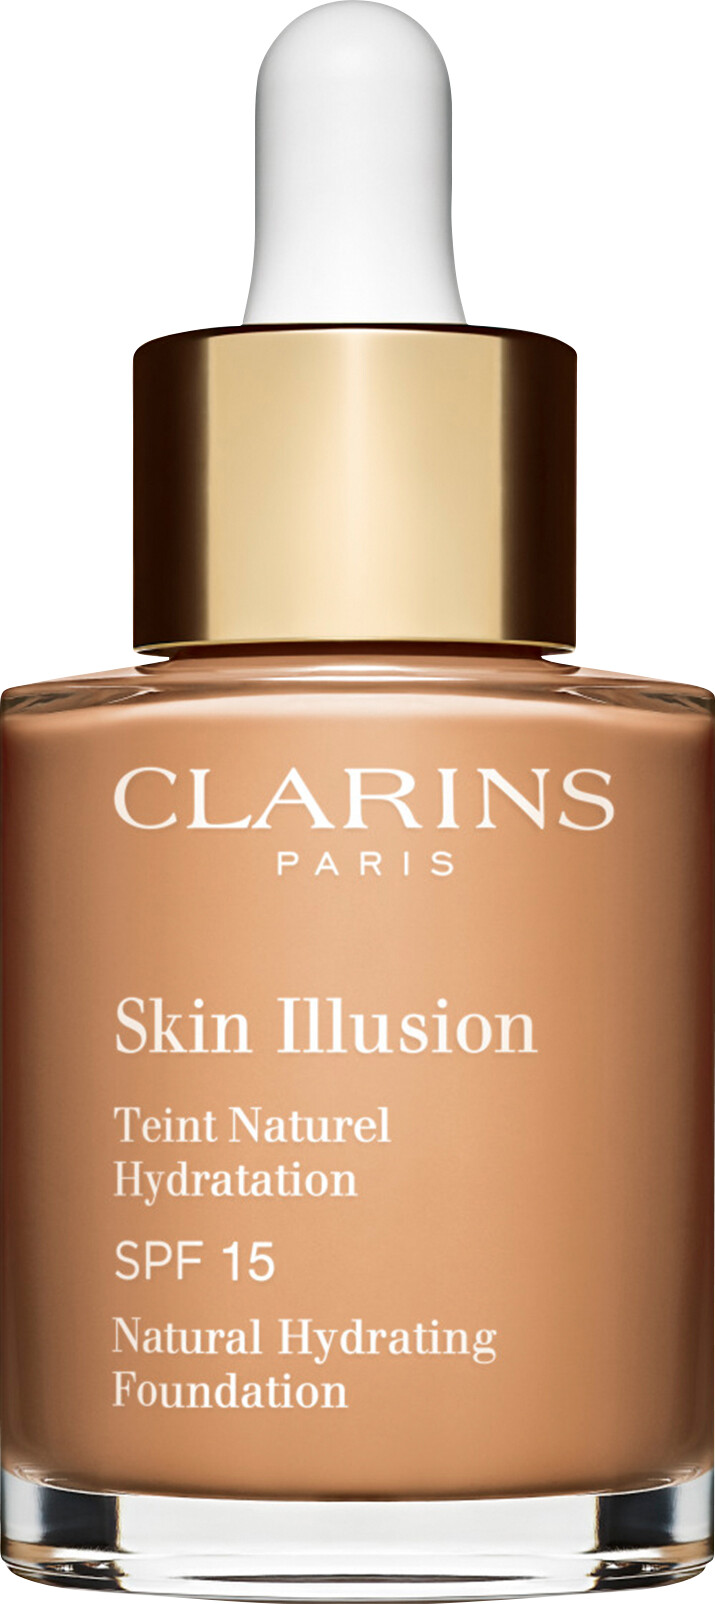 Clarins Skin Illusion Natural Hydrating Foundation SPF15 30ml 108.5 - Cashew